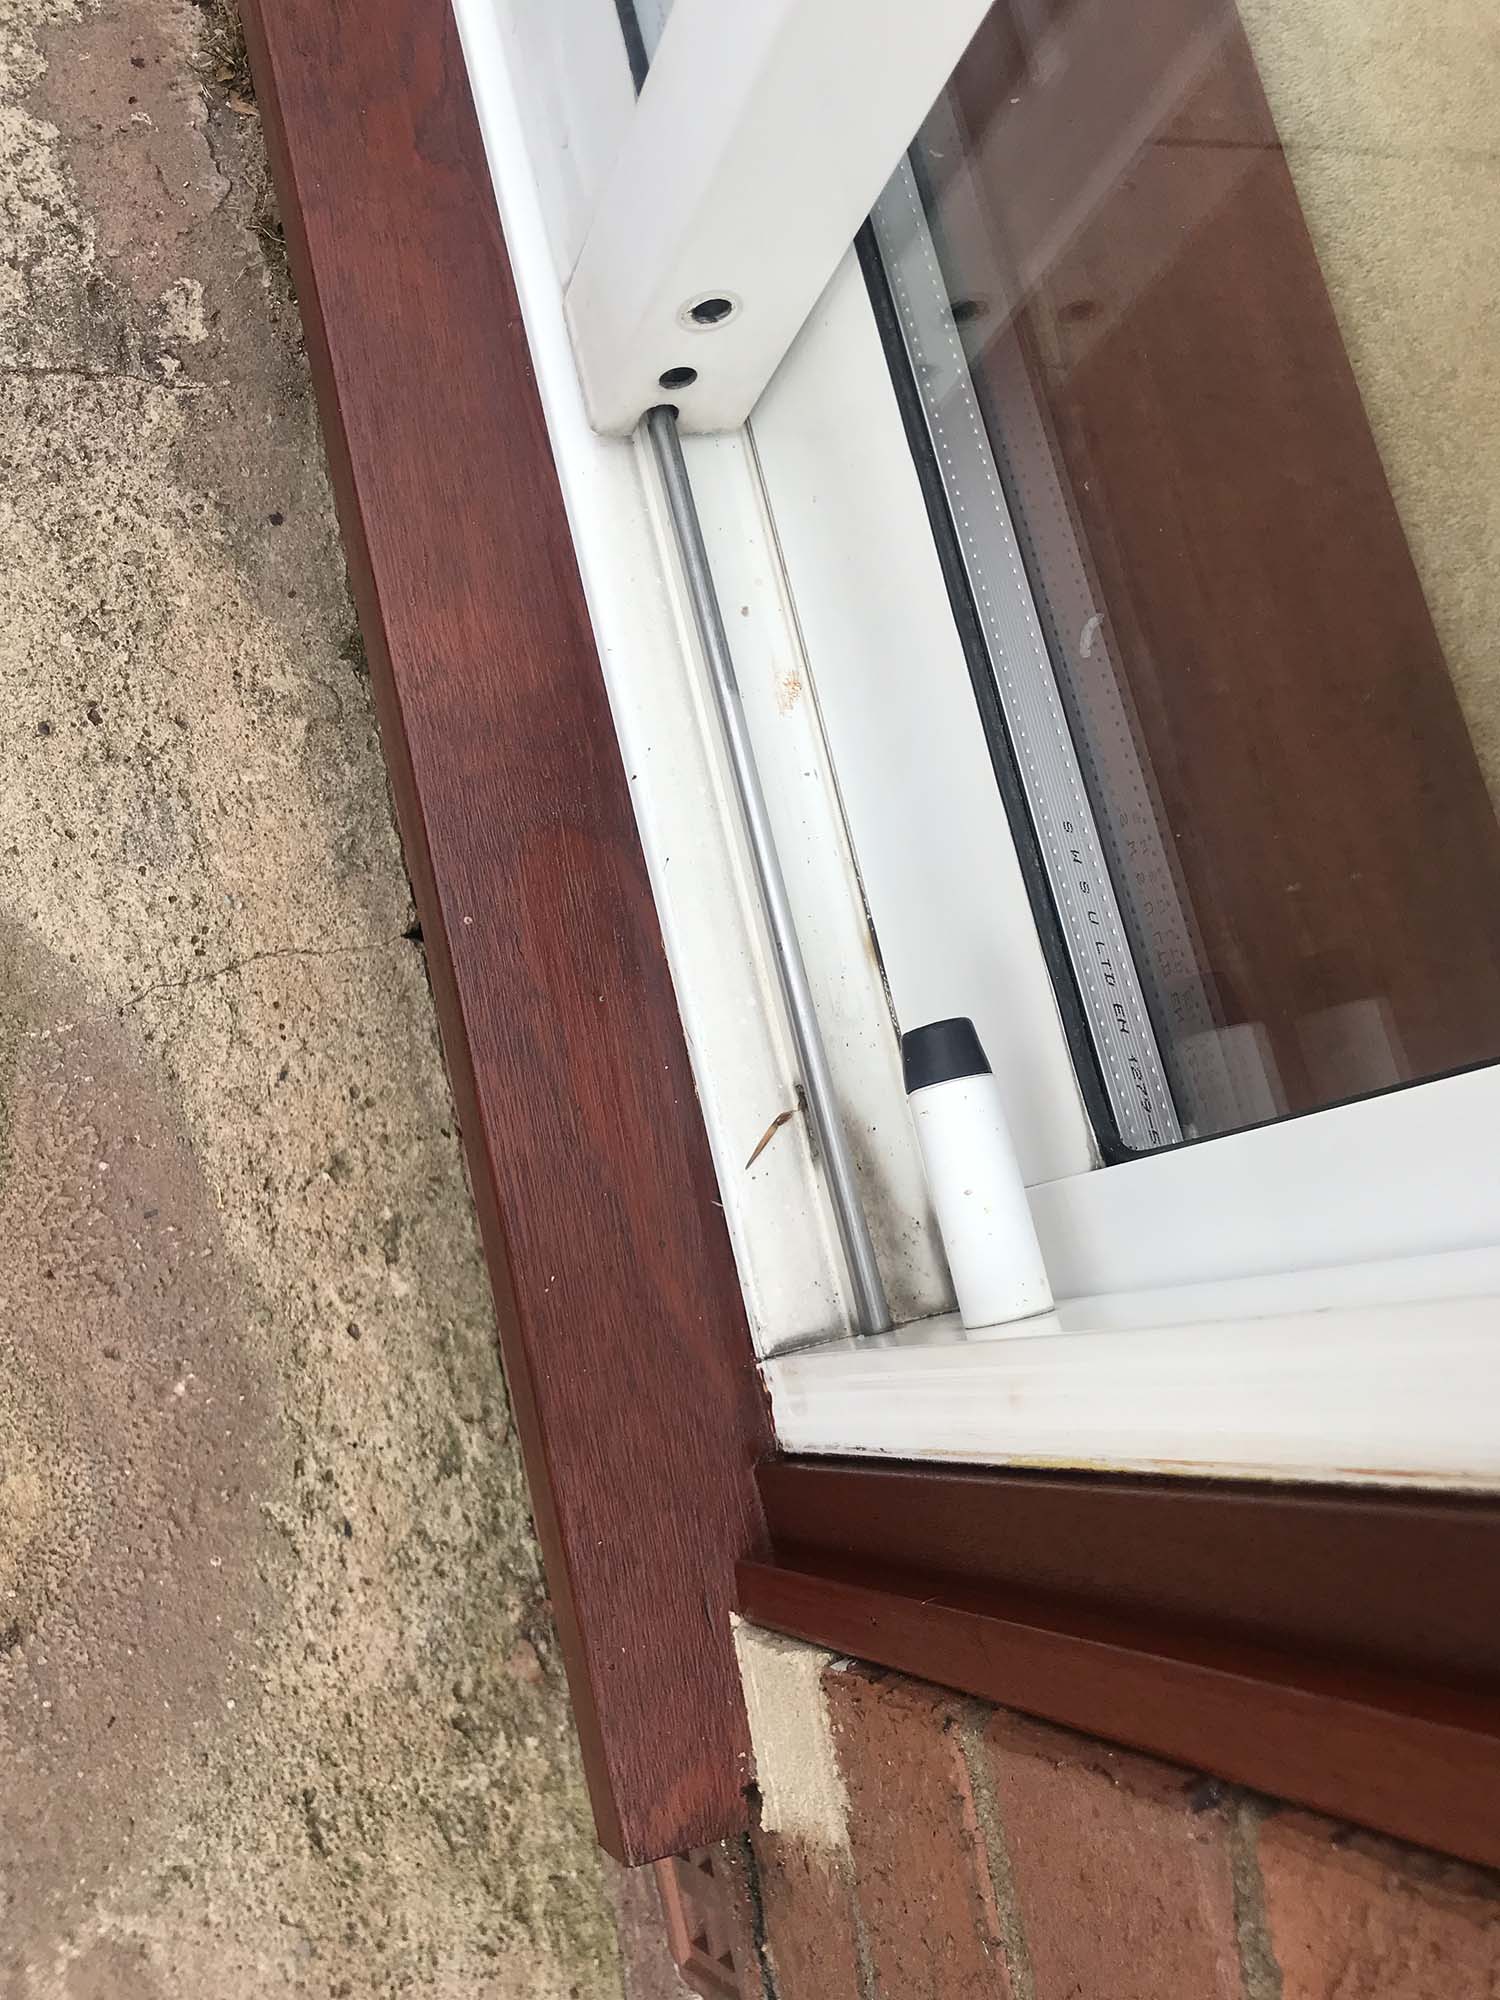 Sliding door repair in Coventry